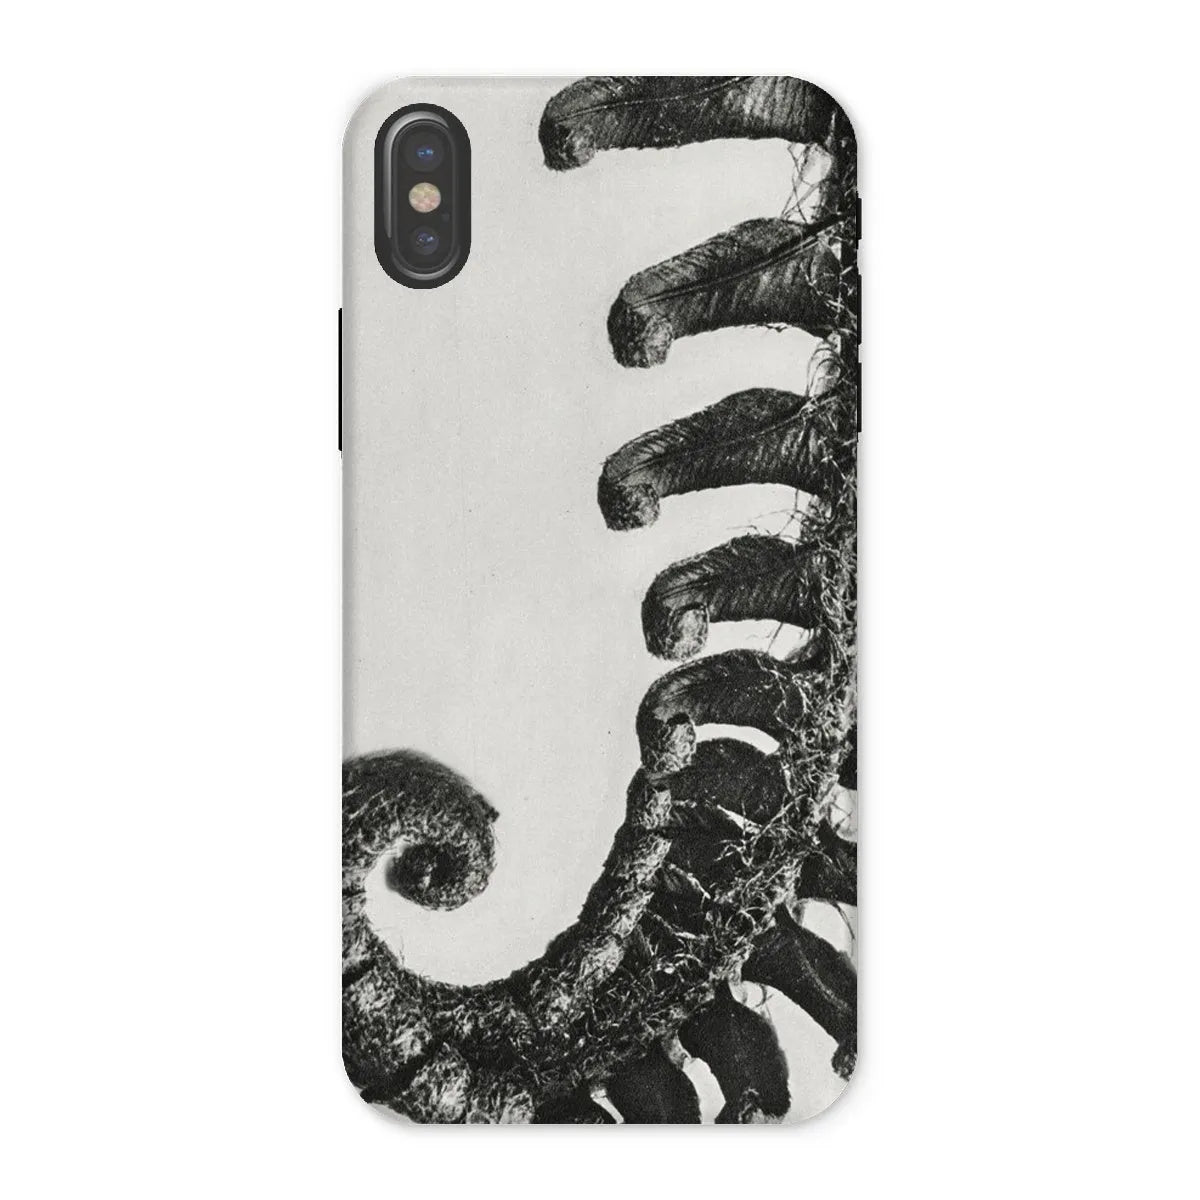 Polystichum Munitum (prickly Shield–fern) By Karl Blossfeldt Tough Phone Case - Iphone x / Matte - Mobile Phone Cases